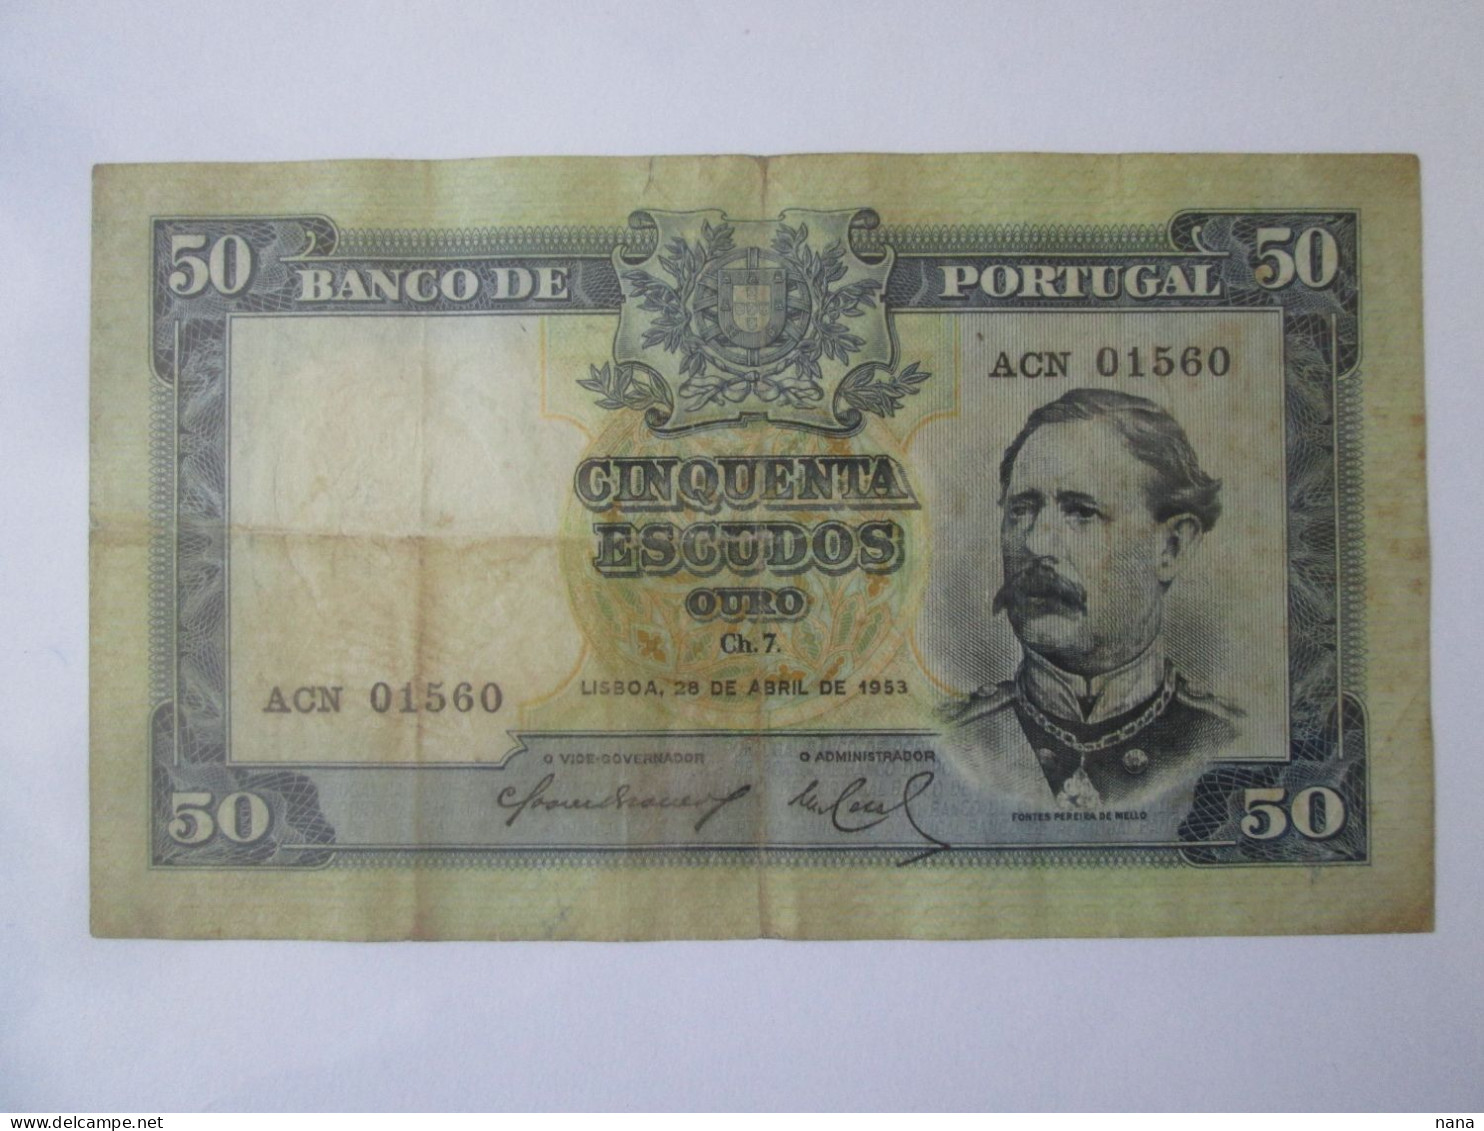 Rare! Portugal 50 Escudos 1953 Banknote See Pictures - Portugal